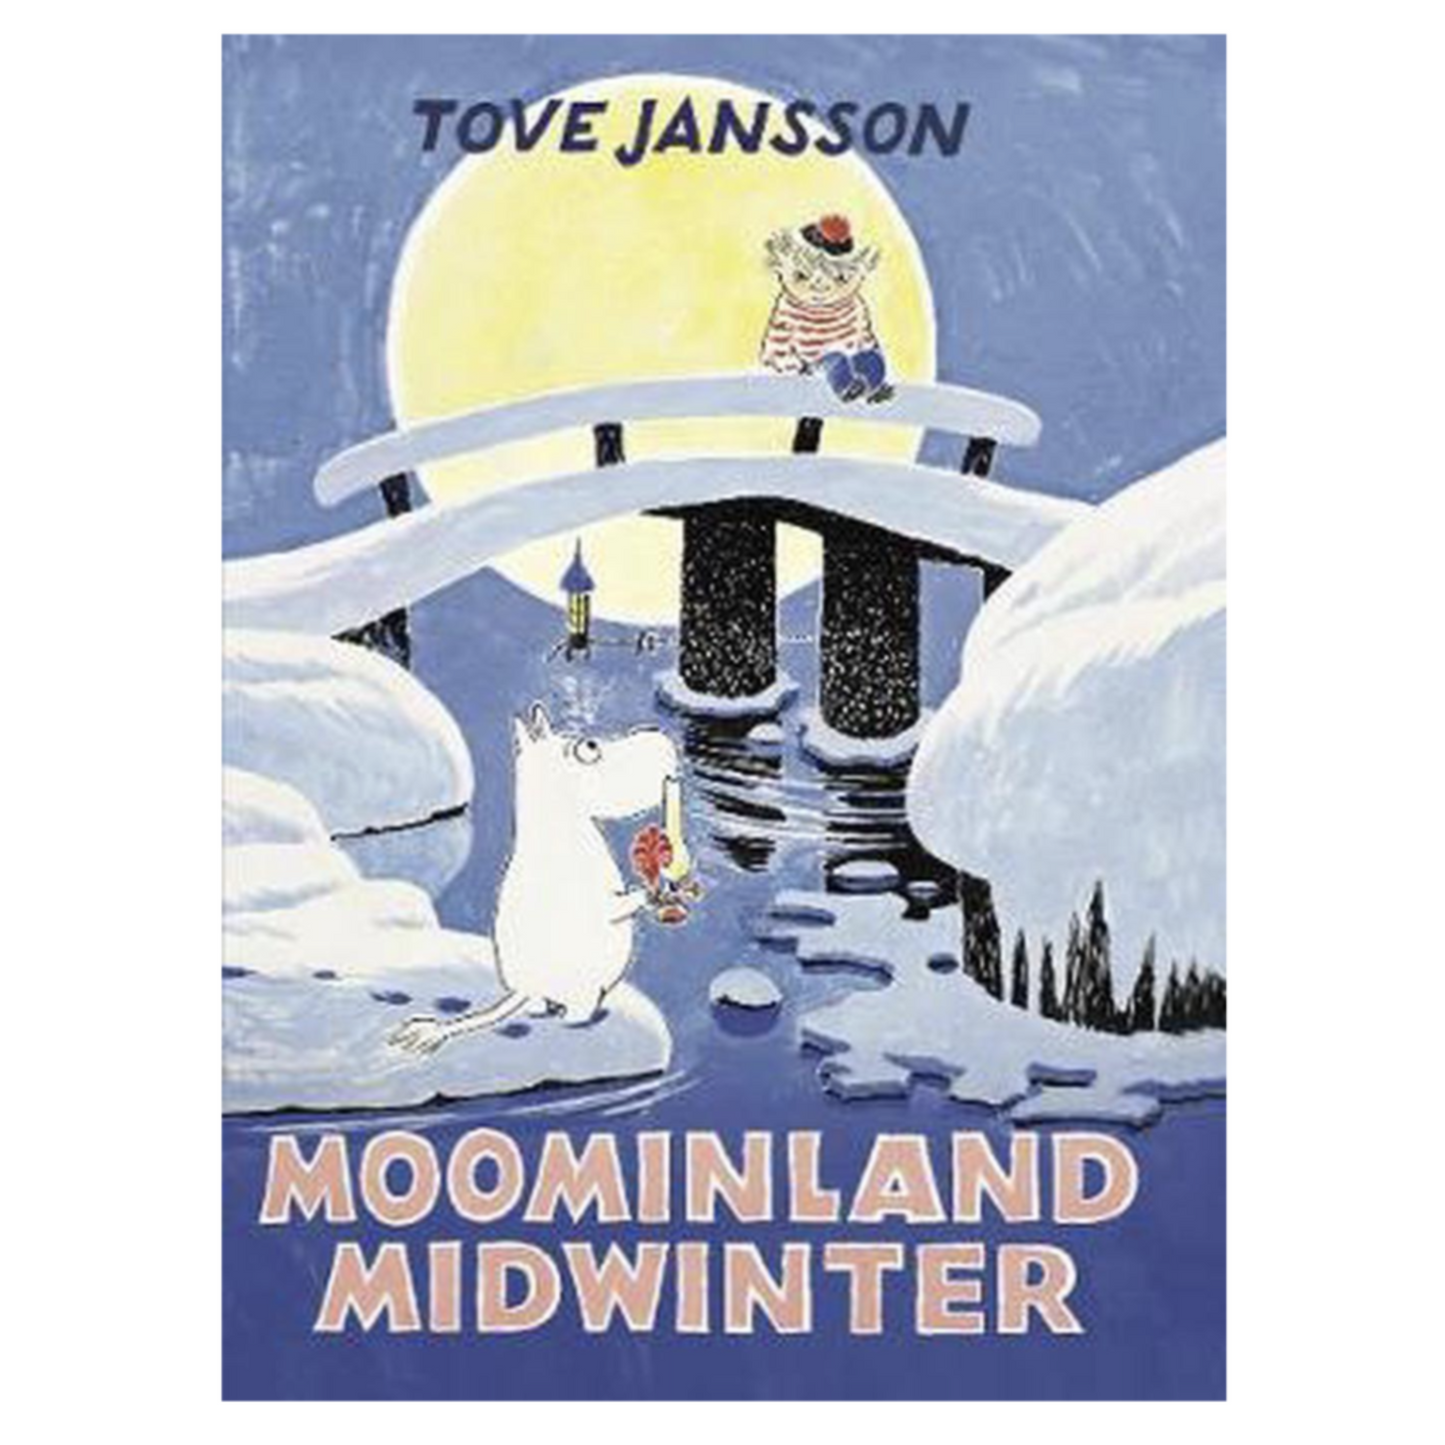 Moominland Midwinter (8031729156383)